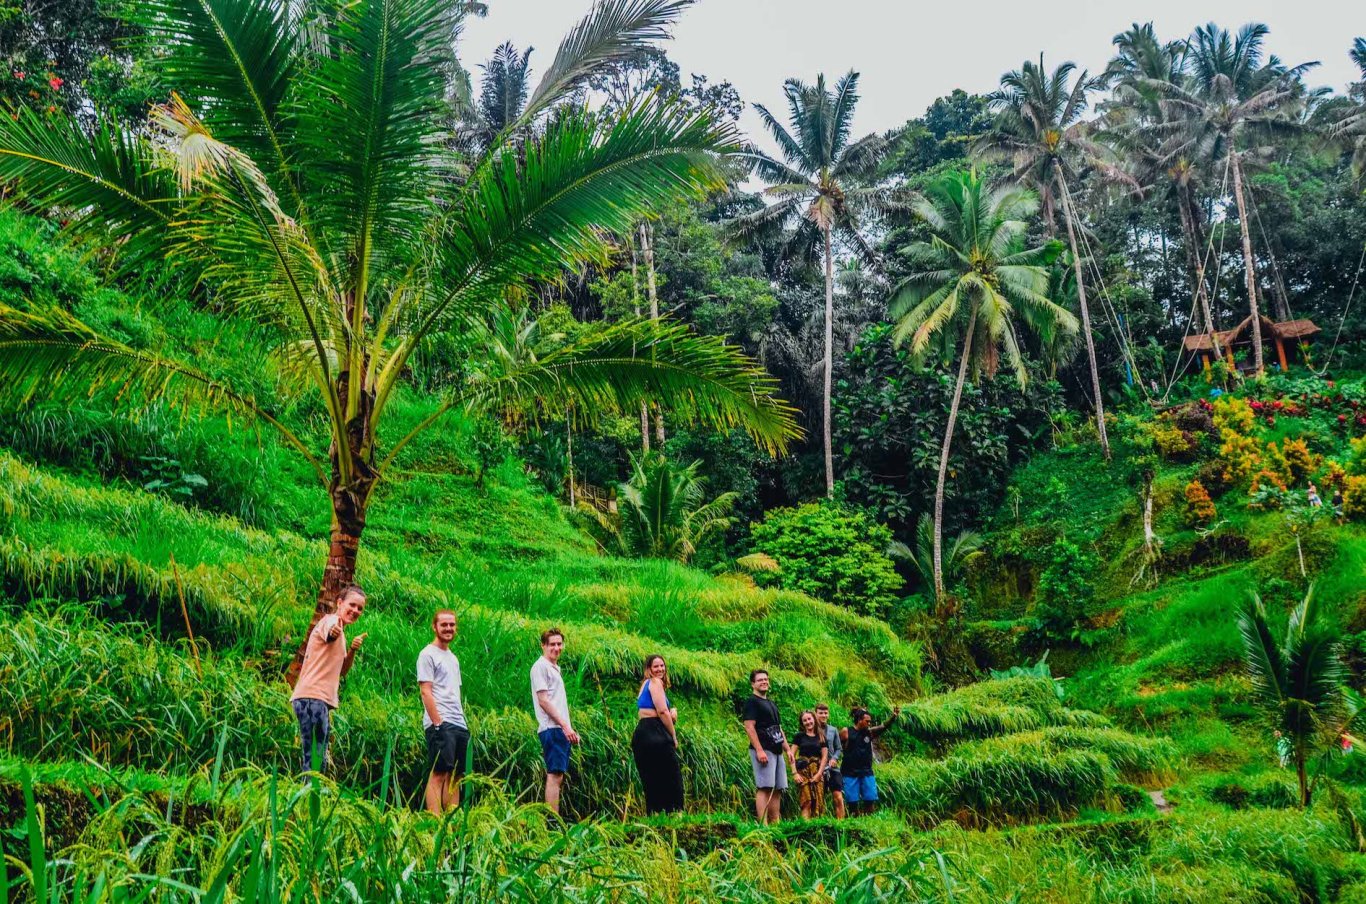 A group walking through the lush emerald green rice terraces in Ubud, Bali, Indonesia 